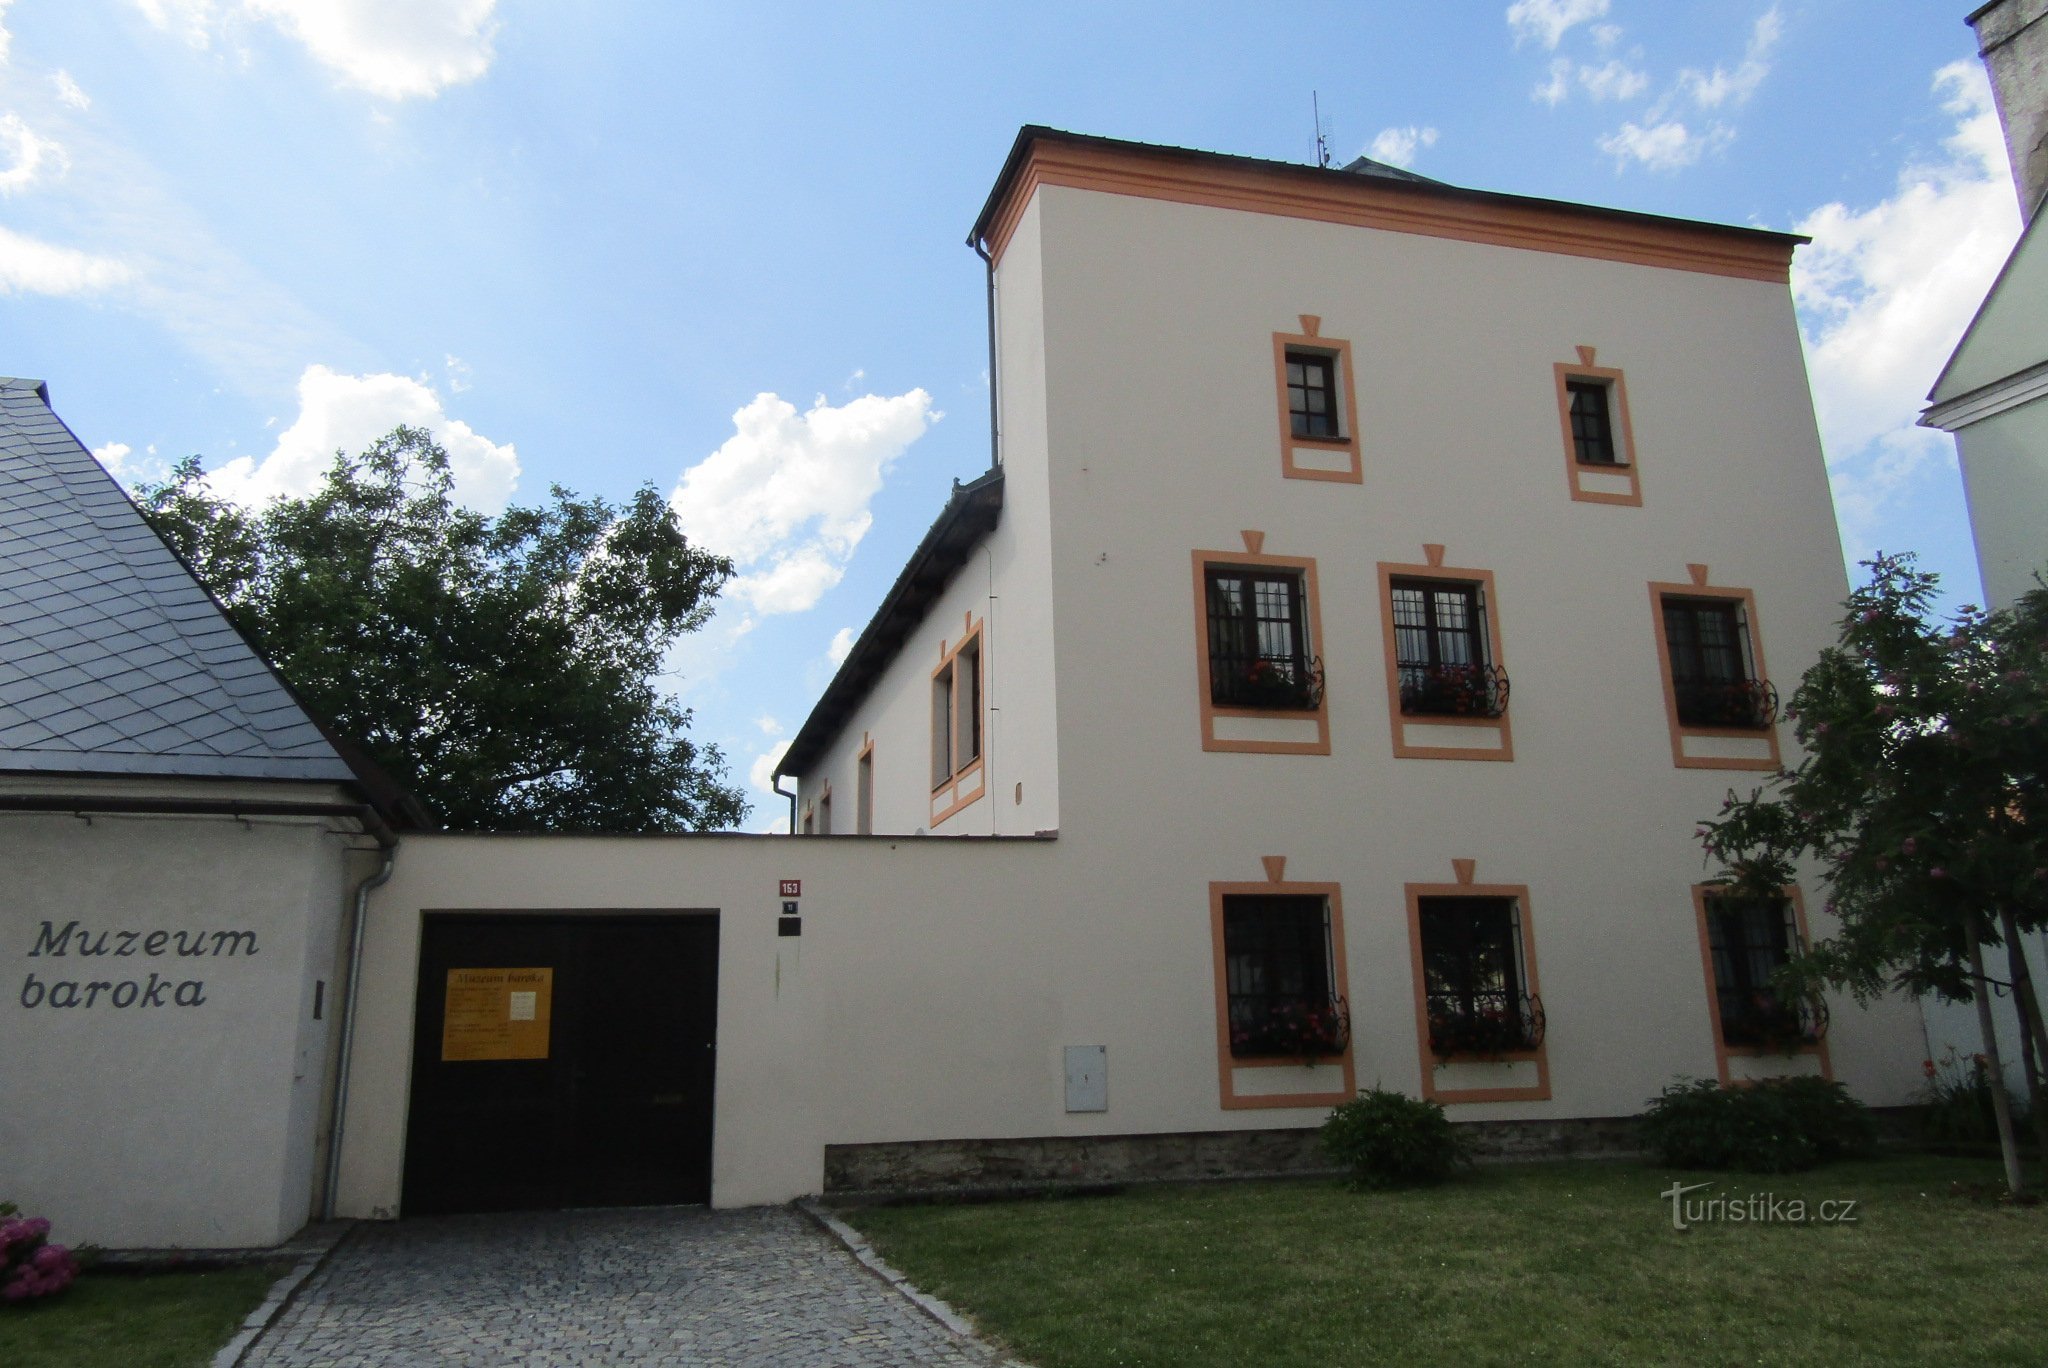 Uničovin museoon